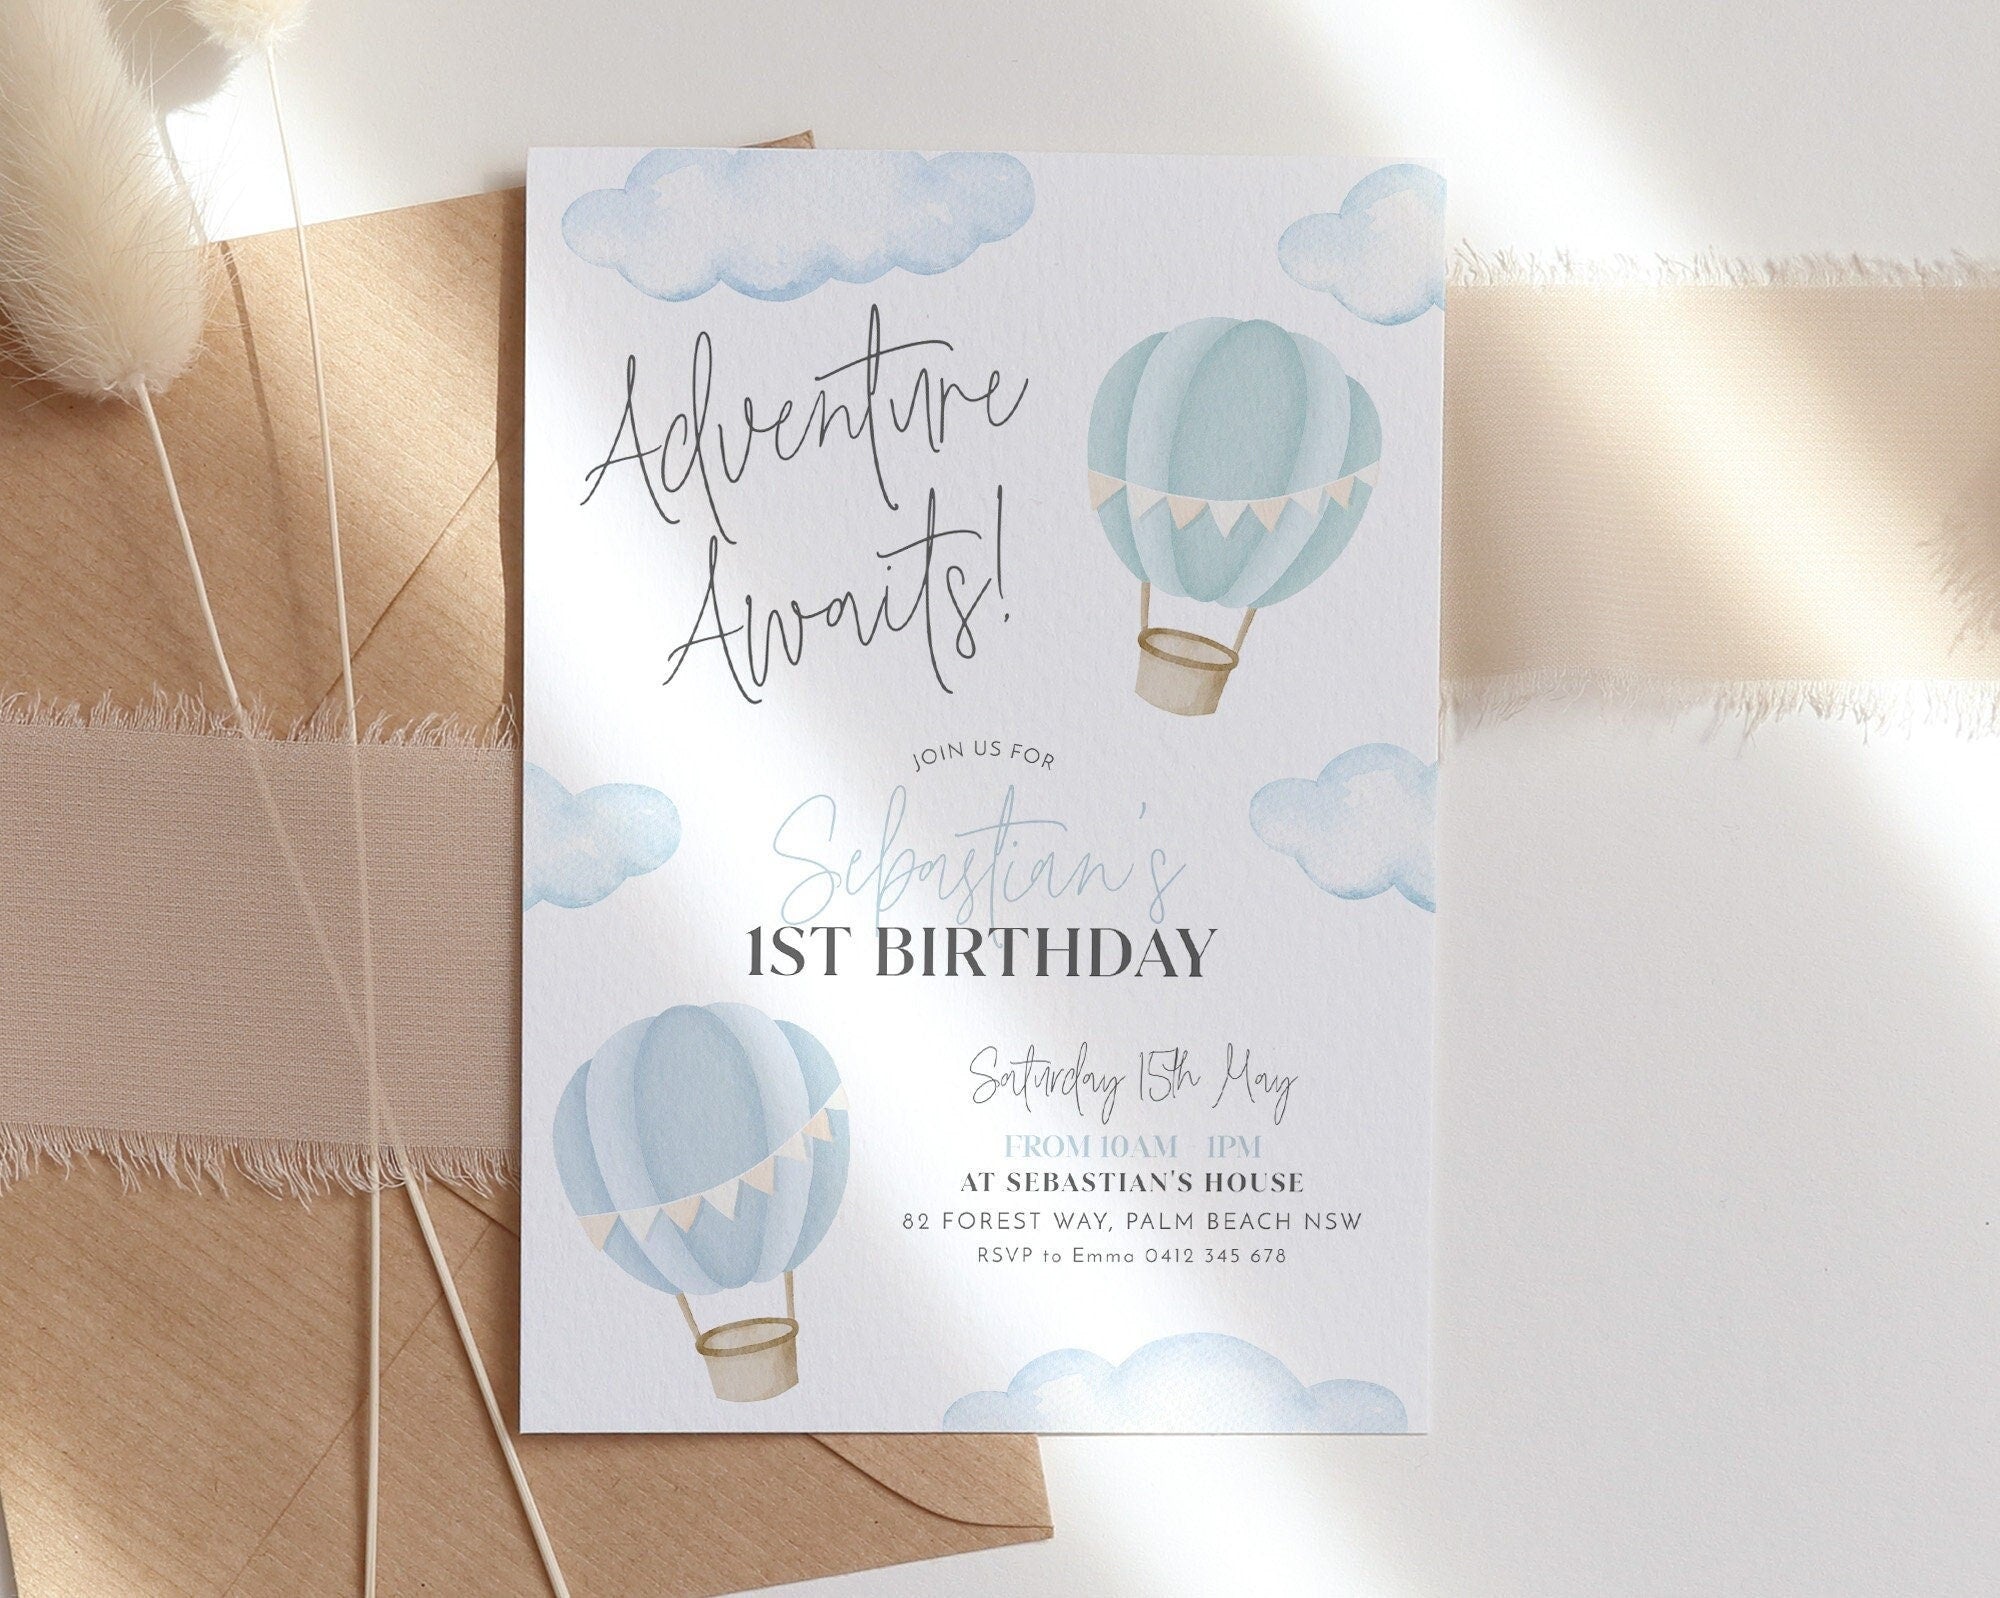 Hot Air Balloon 1st Birthday Invitation, Adventure Awaits Invitation 1st Birthday Boy, Printable Invite Blue Hot Air Balloon Up Up and Away